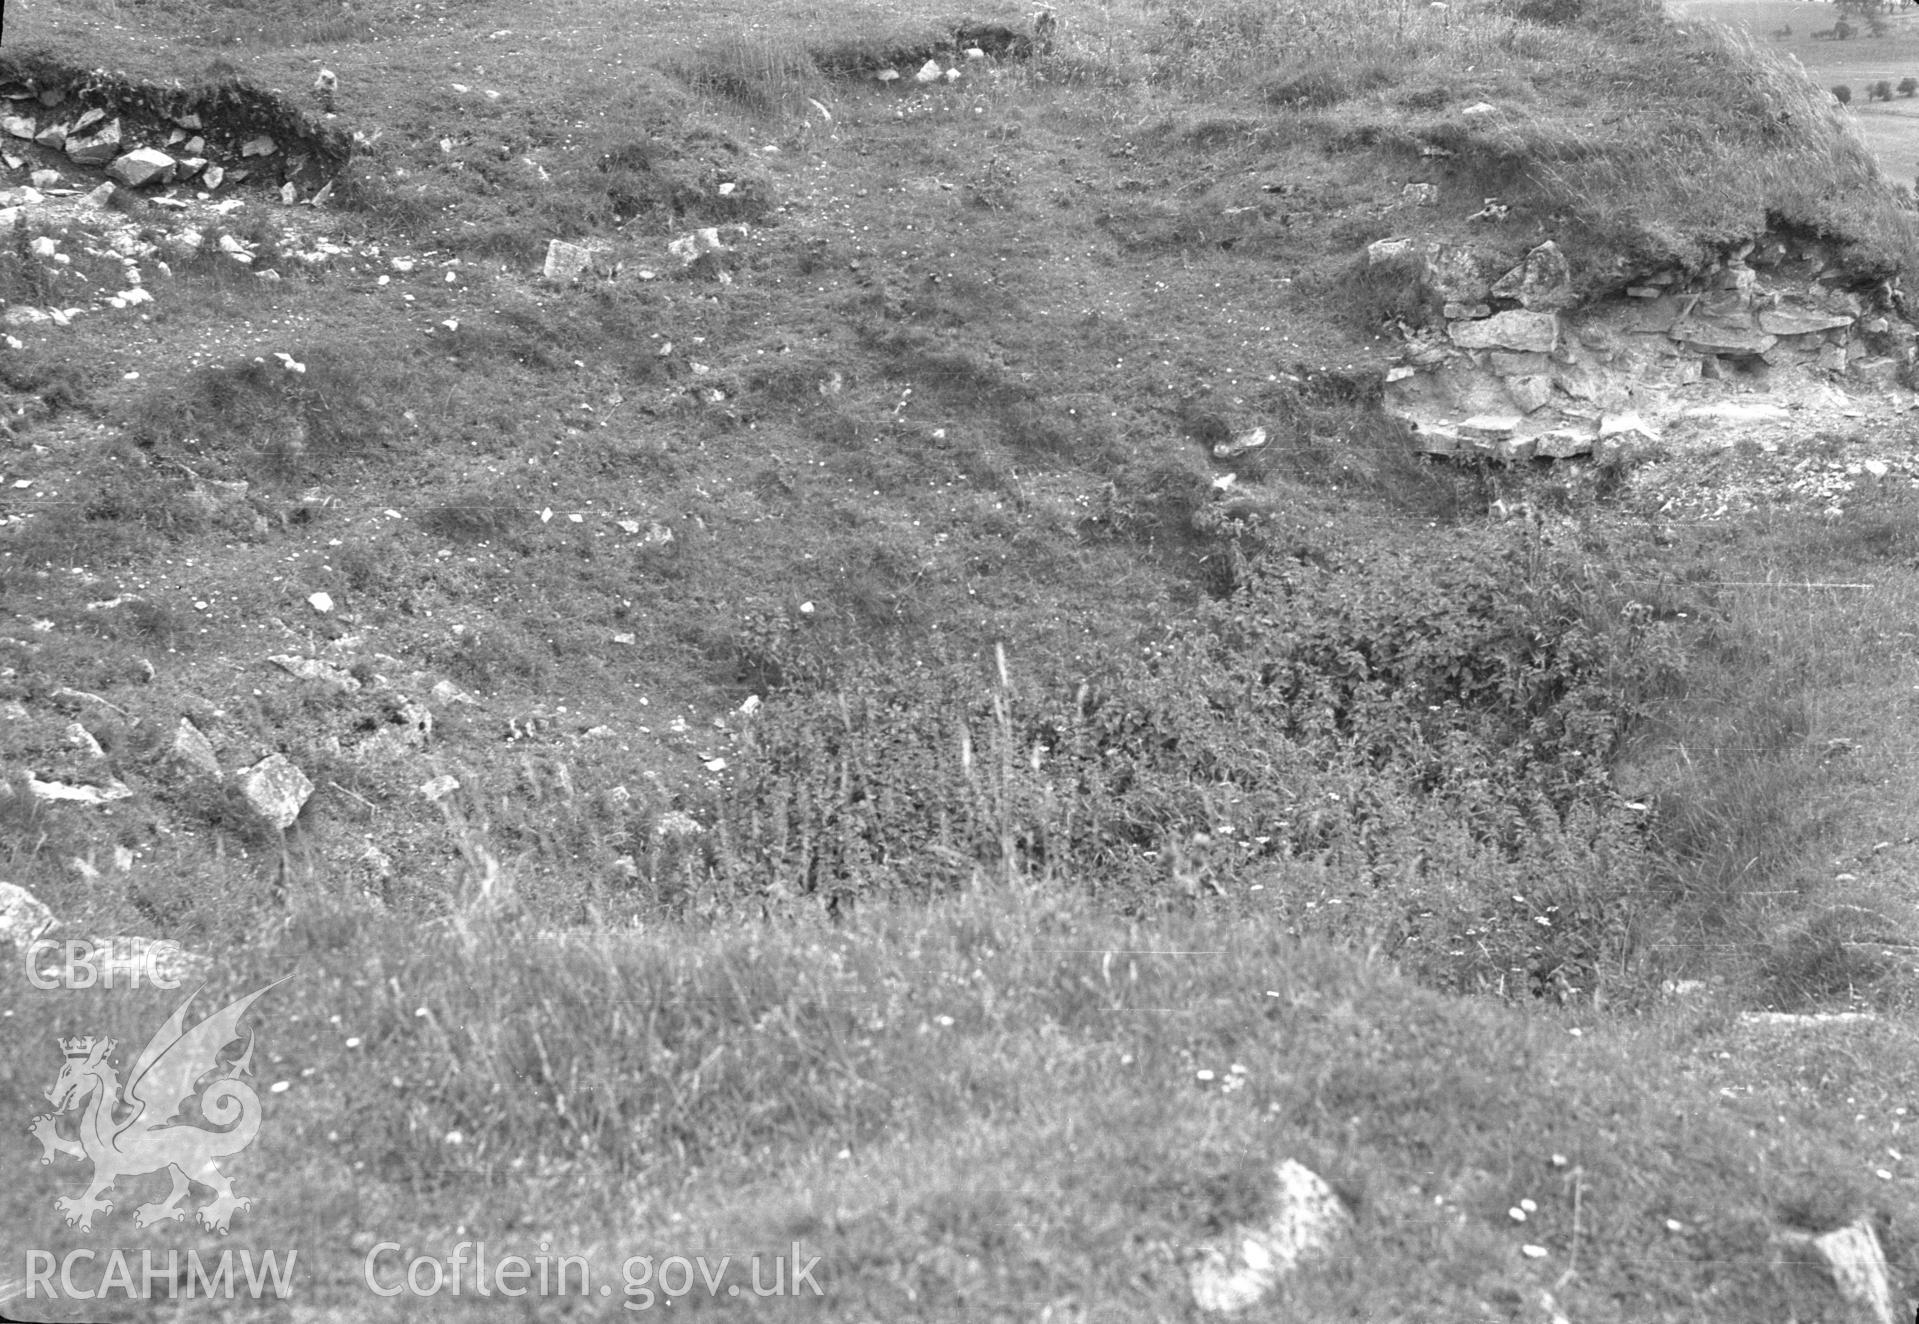 Digital copy of a nitrate negative showing an unidentified site taken by Ordnance Survey.